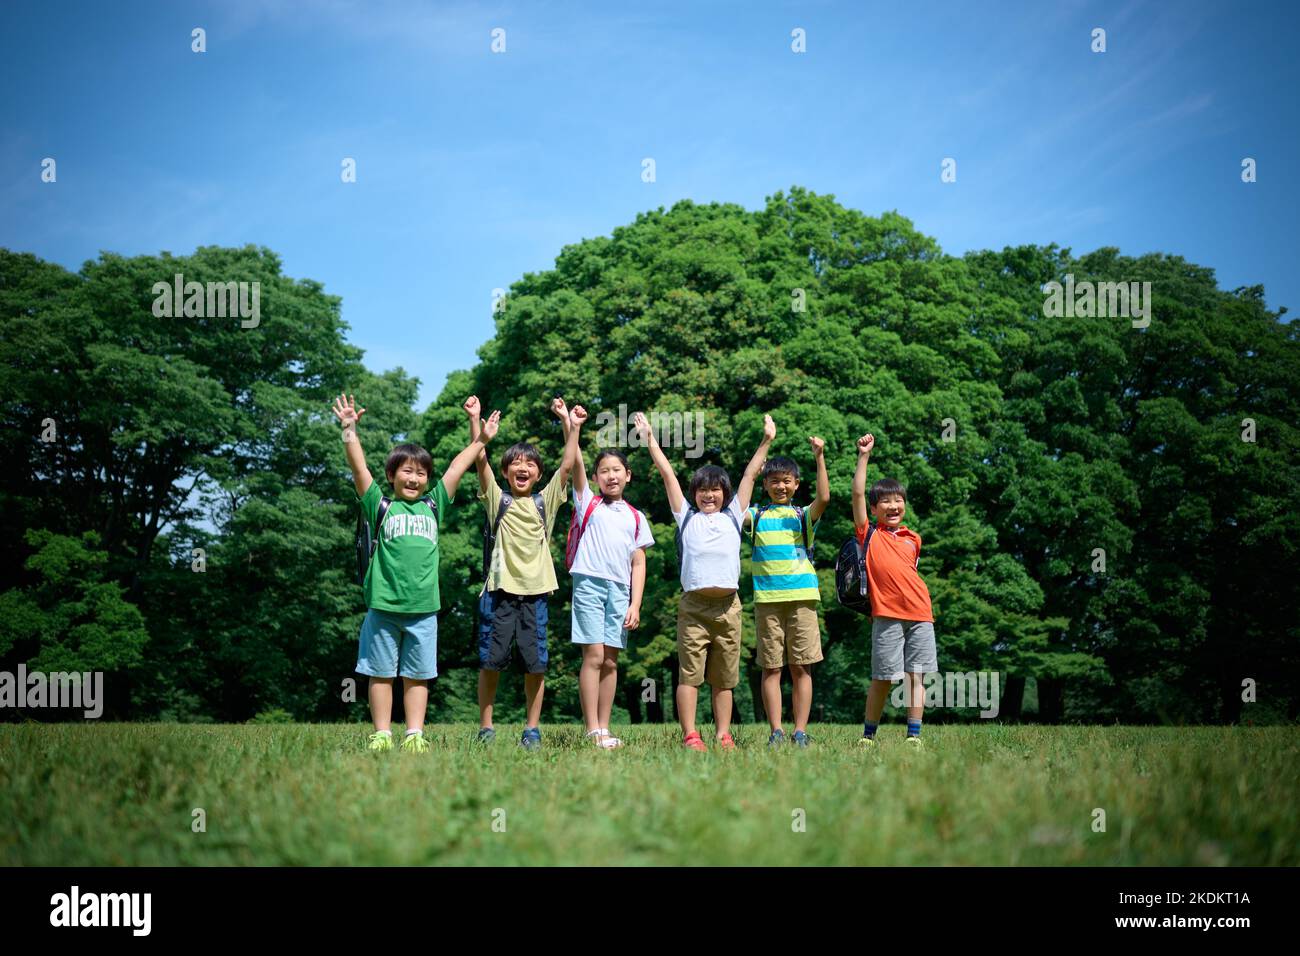 Japanese kids at city park Stock Photo